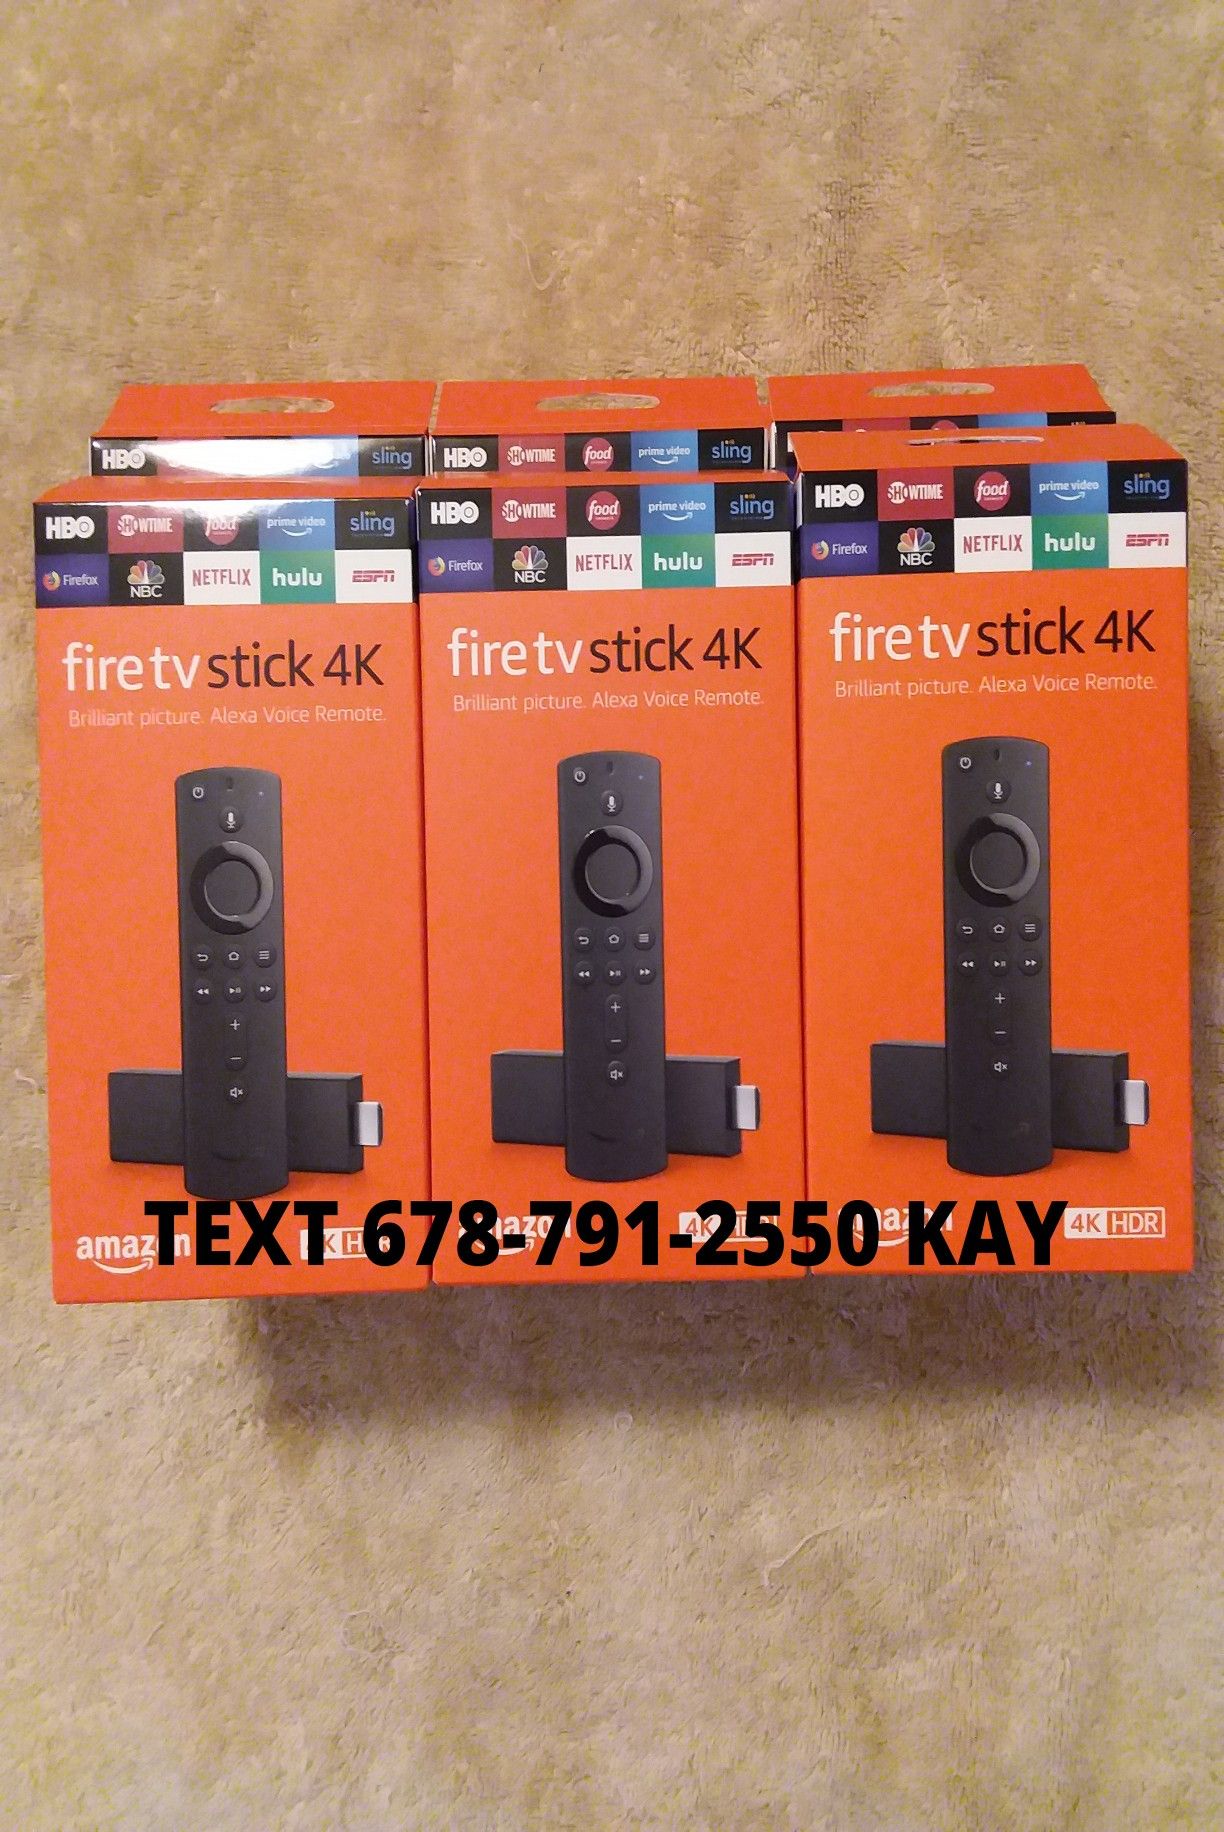 All New / Unlocked /4K HDR Amazon Fire TV Stick